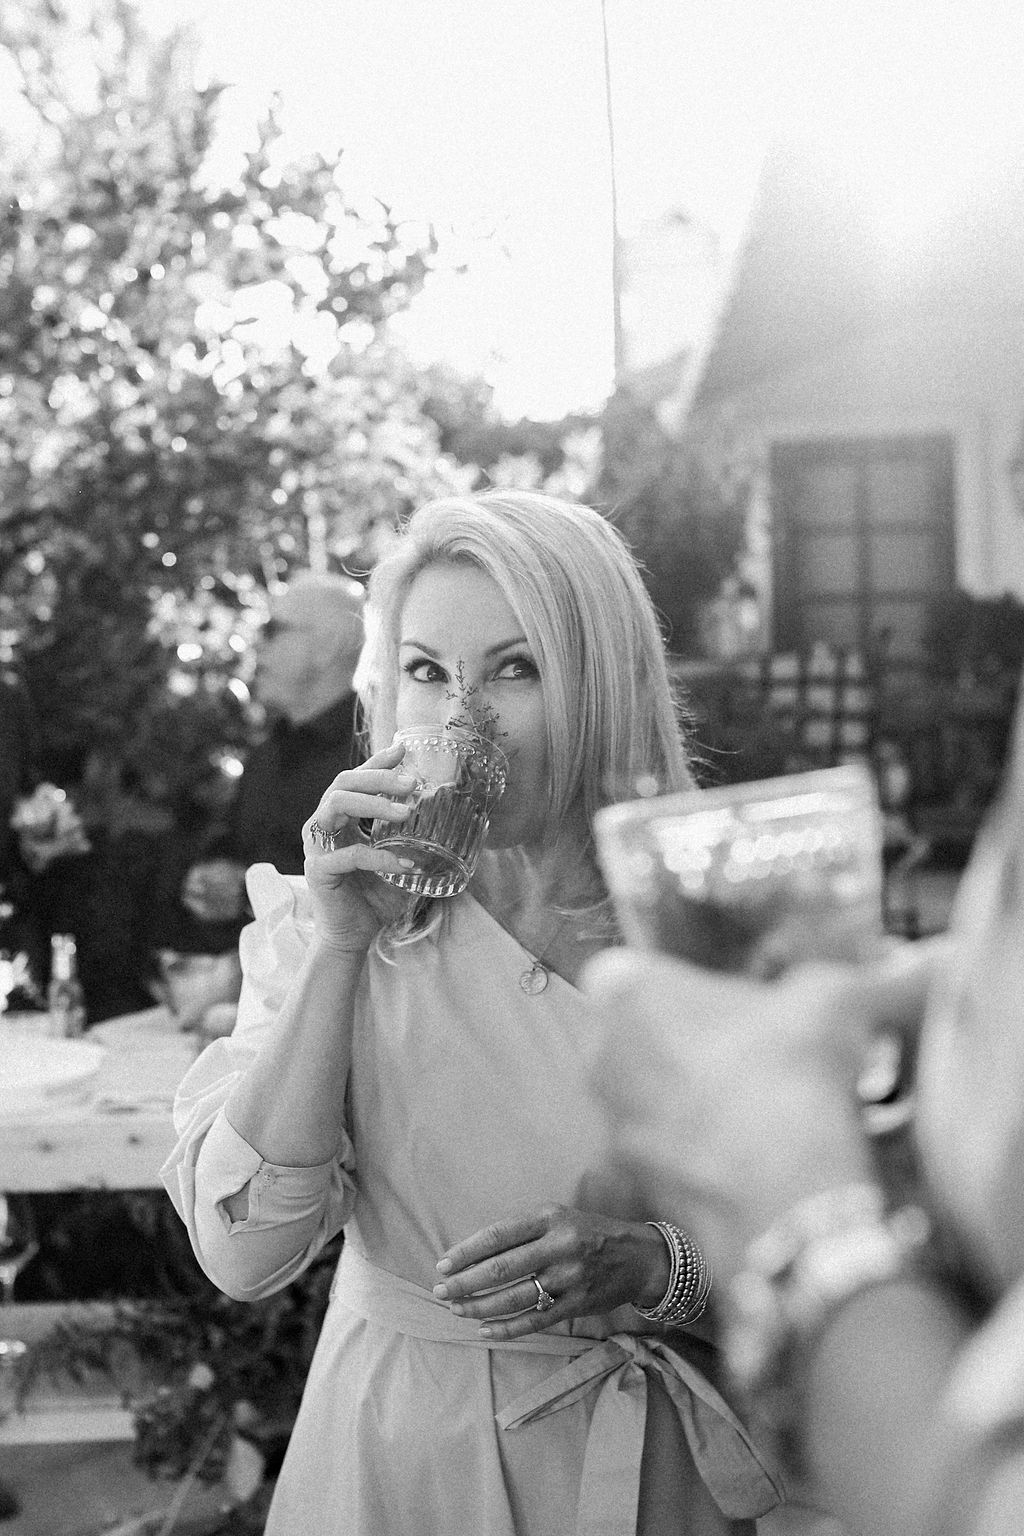 Valerie Rice dinner party in Santa Barbara, summer cocktails